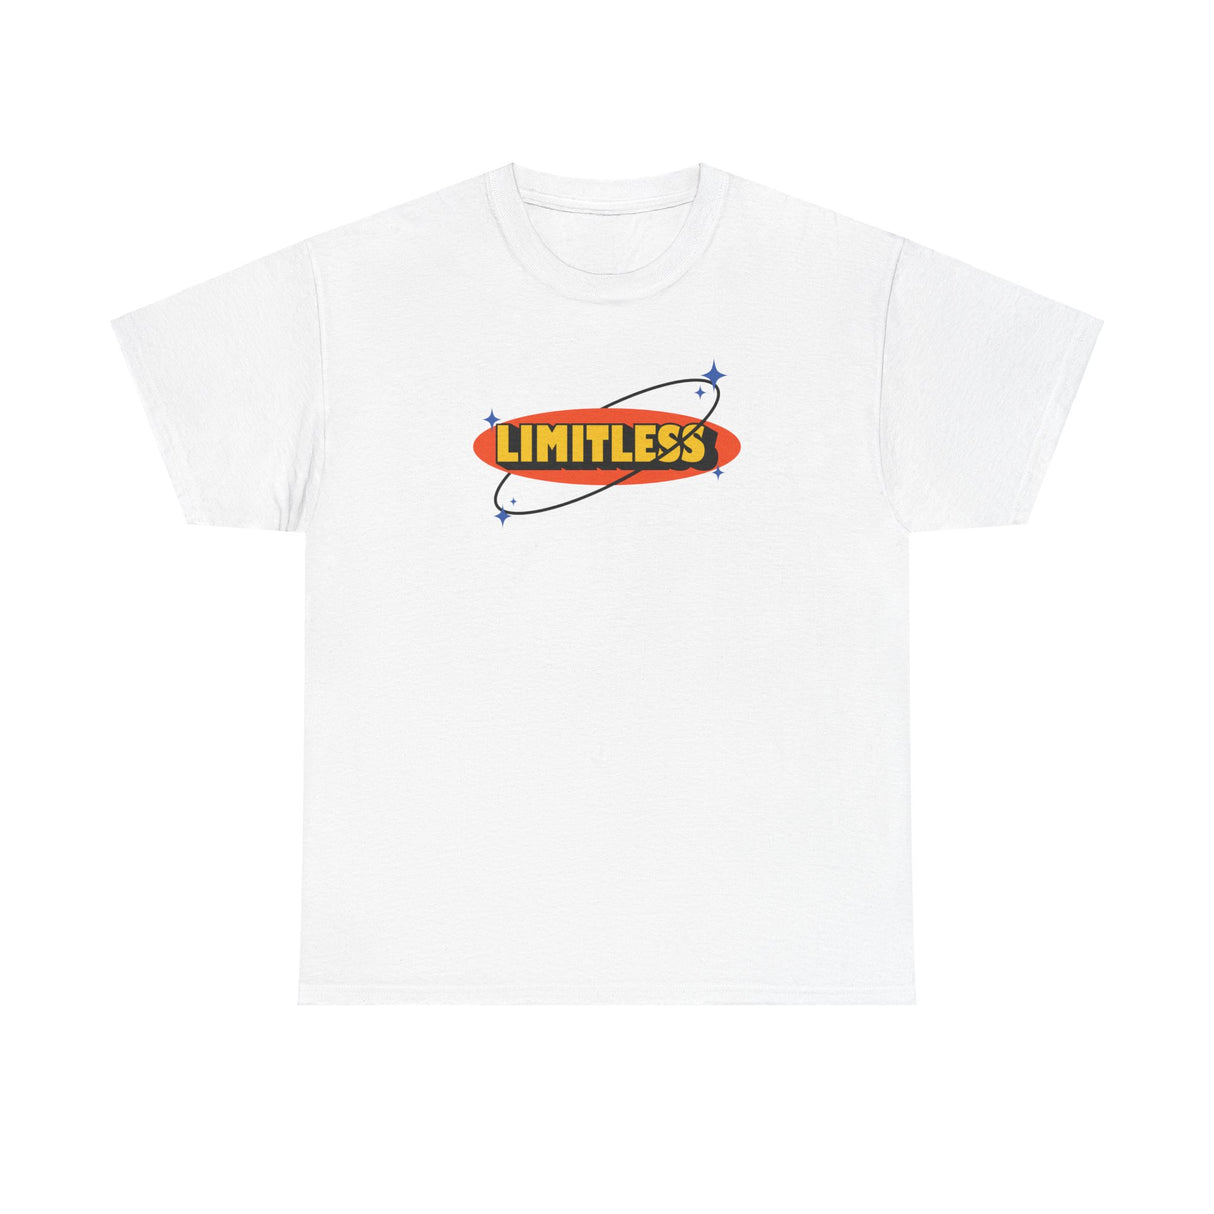 Limitless Graphic Tee Shirt